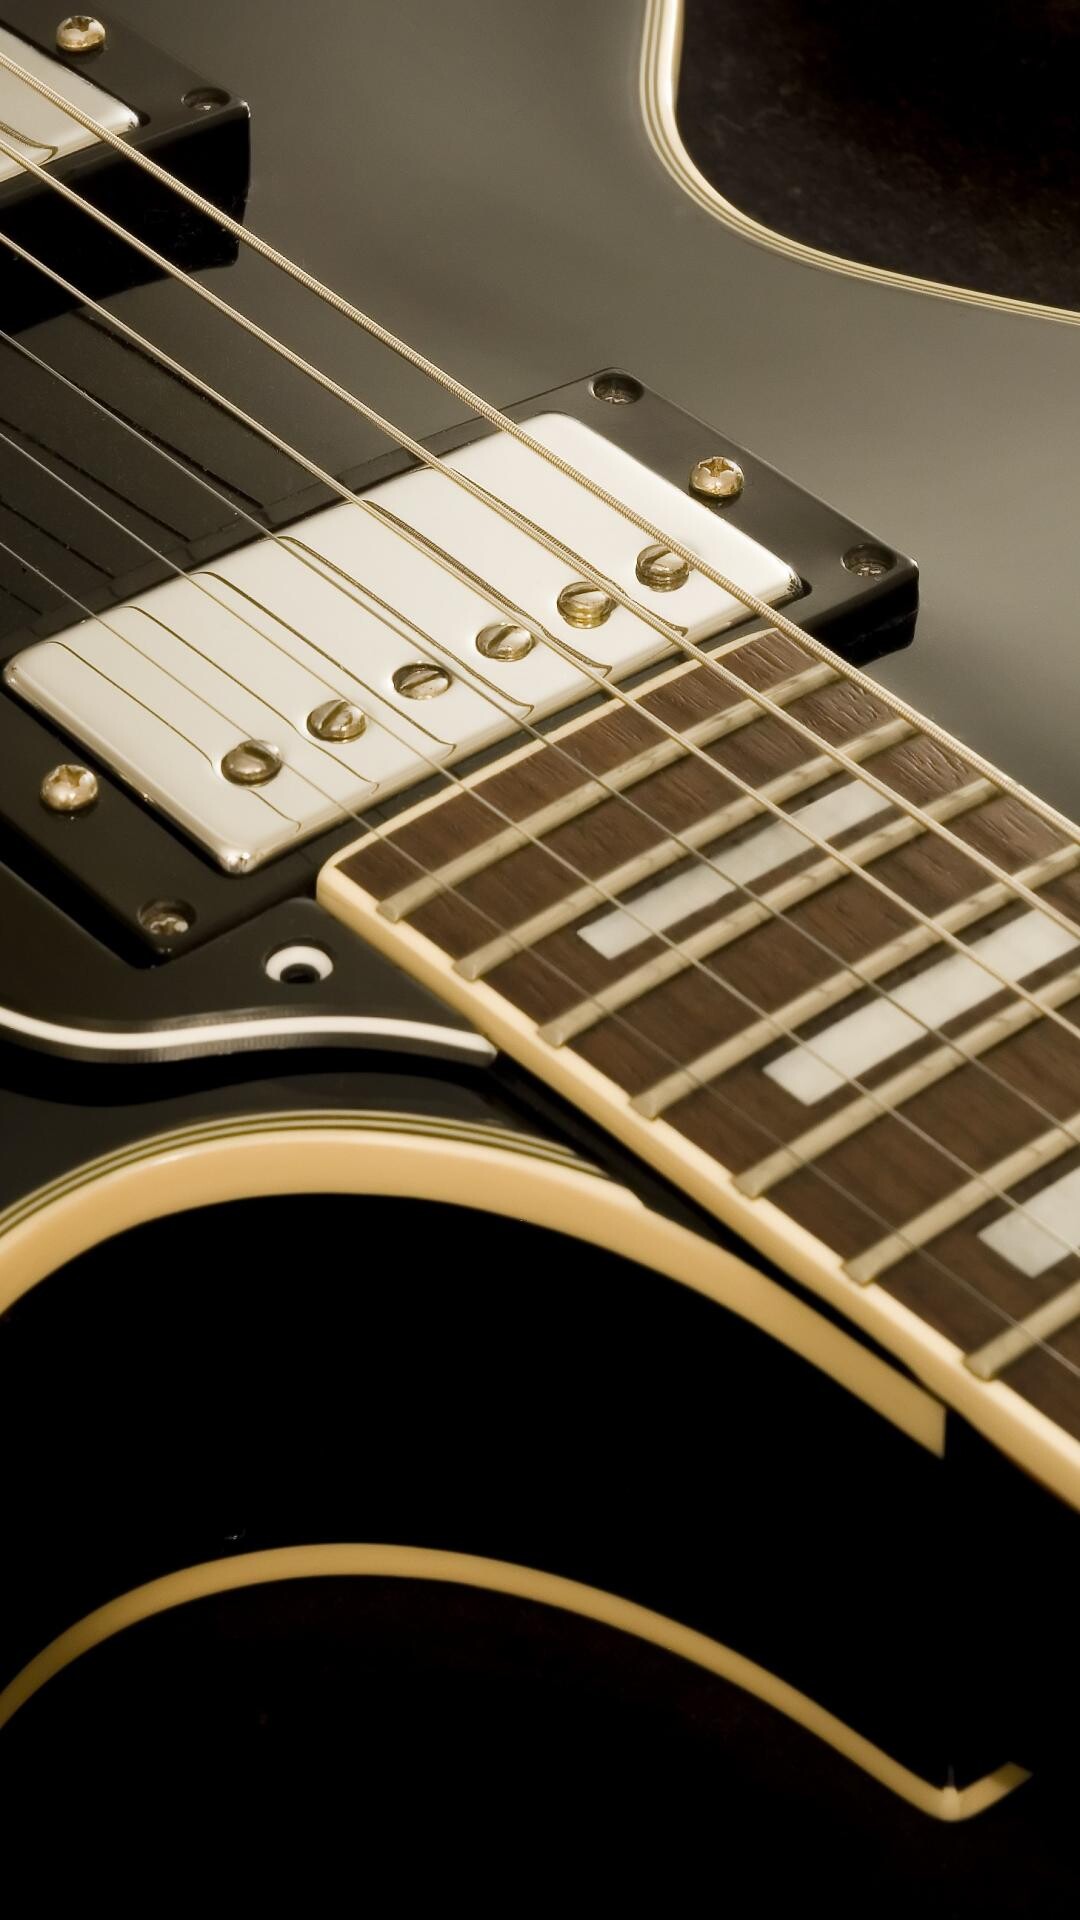 Gibson Guitar: The Joe Perry Boneyard Les Paul, An extremely rare musical instrument. 1080x1920 Full HD Wallpaper.